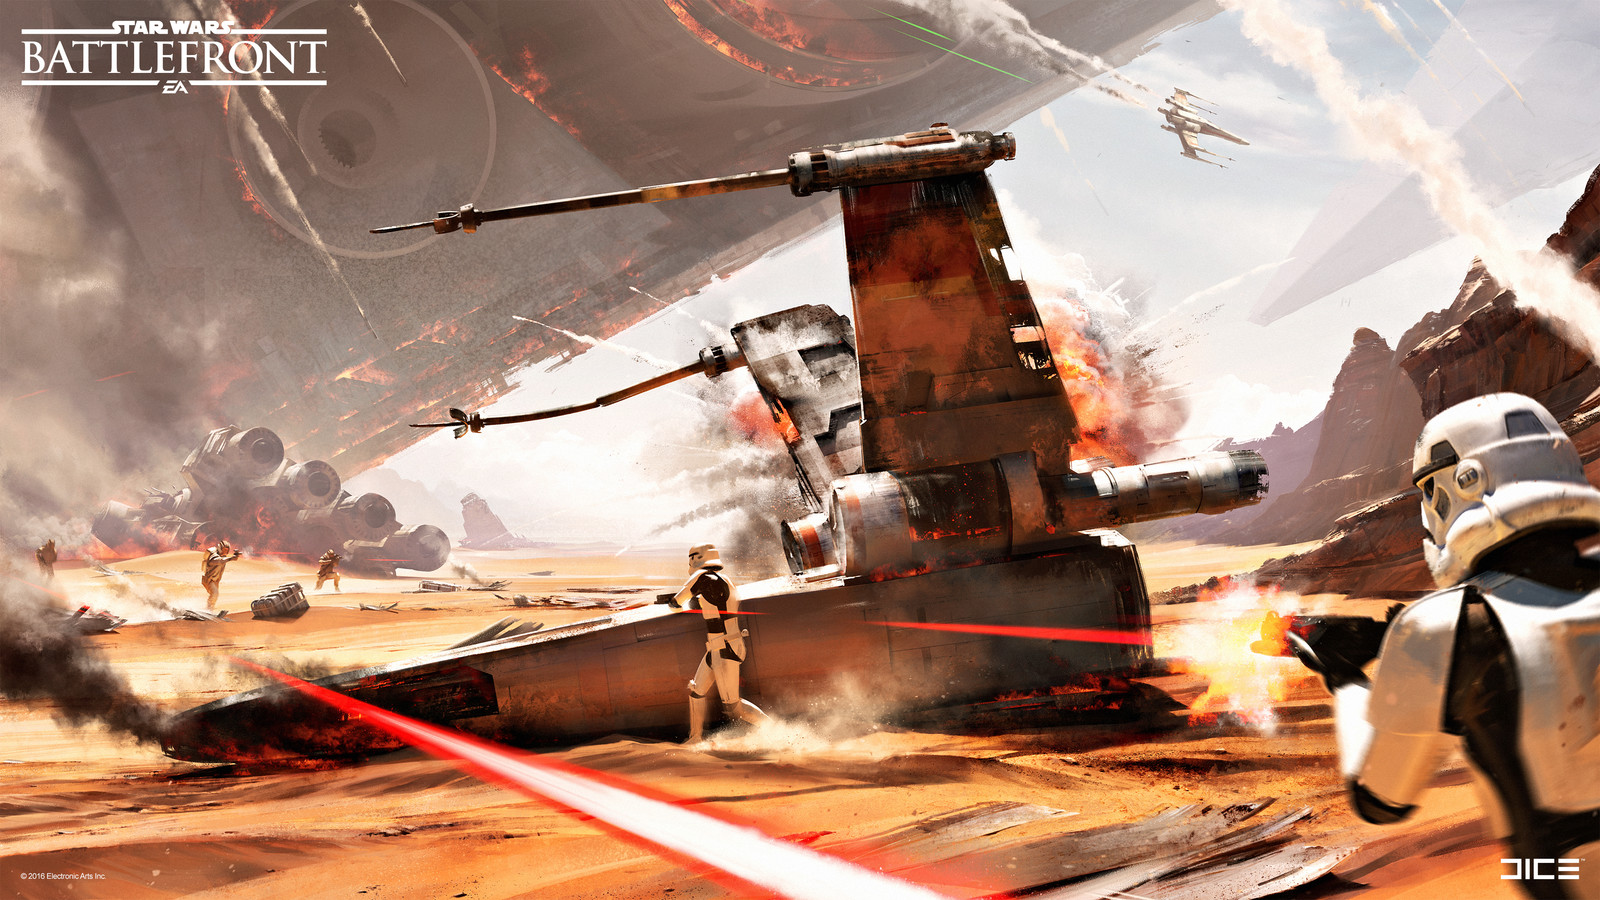 Official Jakku Concept Art for the 2015 Star Wars Battlefront game. (2015)